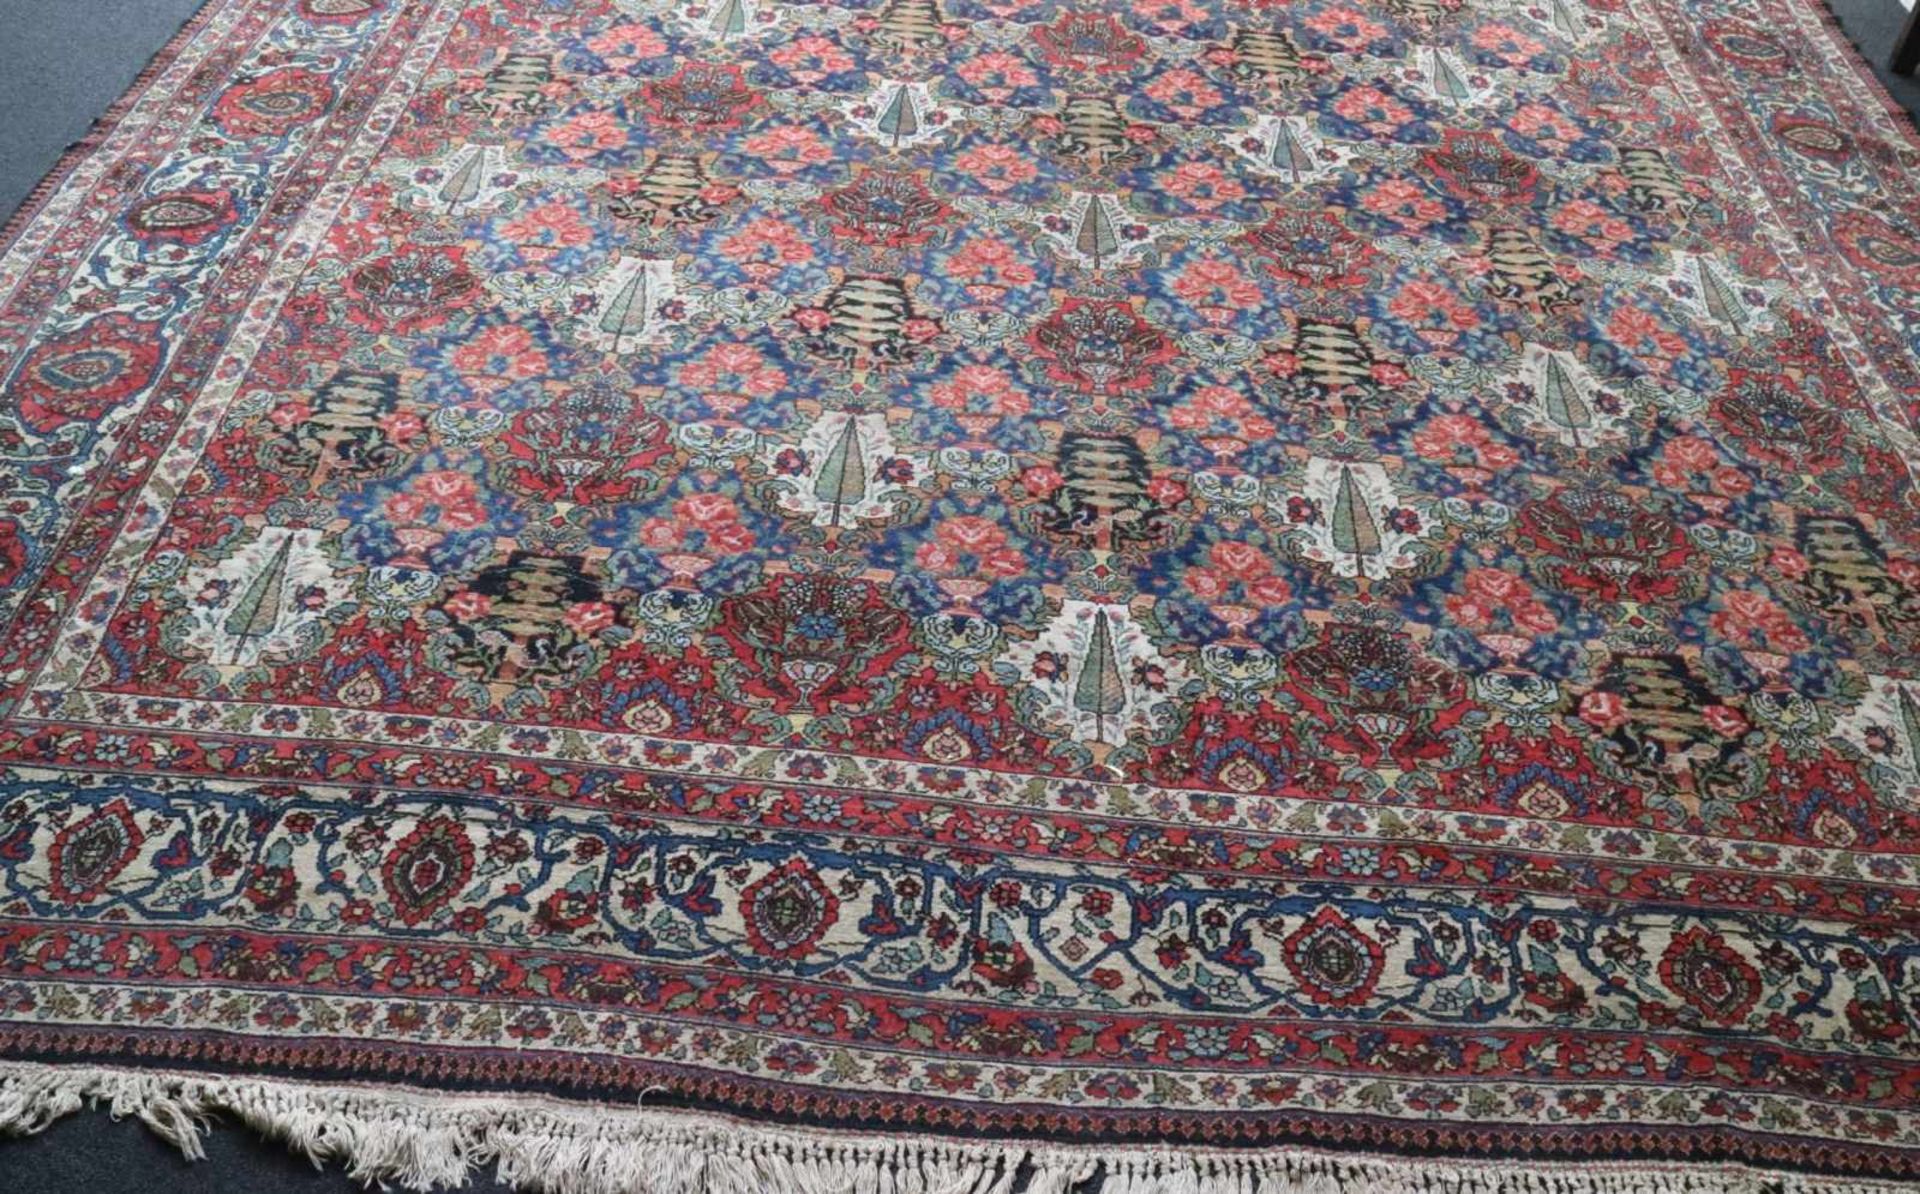 Oriental carpet Oriental carpet 383 x 553 cm